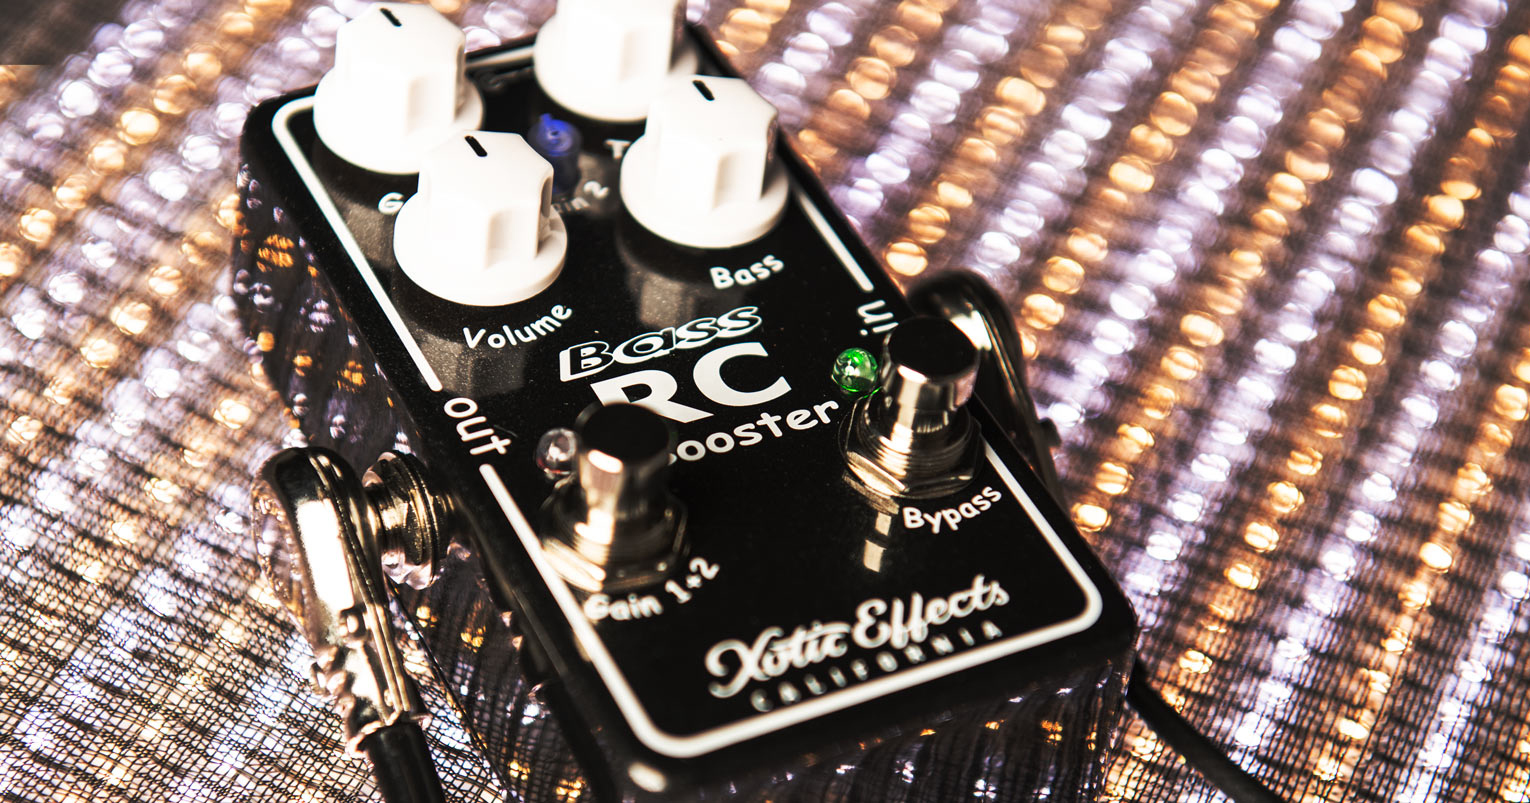 Xotic Announces Bass RC Booster V2 Pedal – No Treble